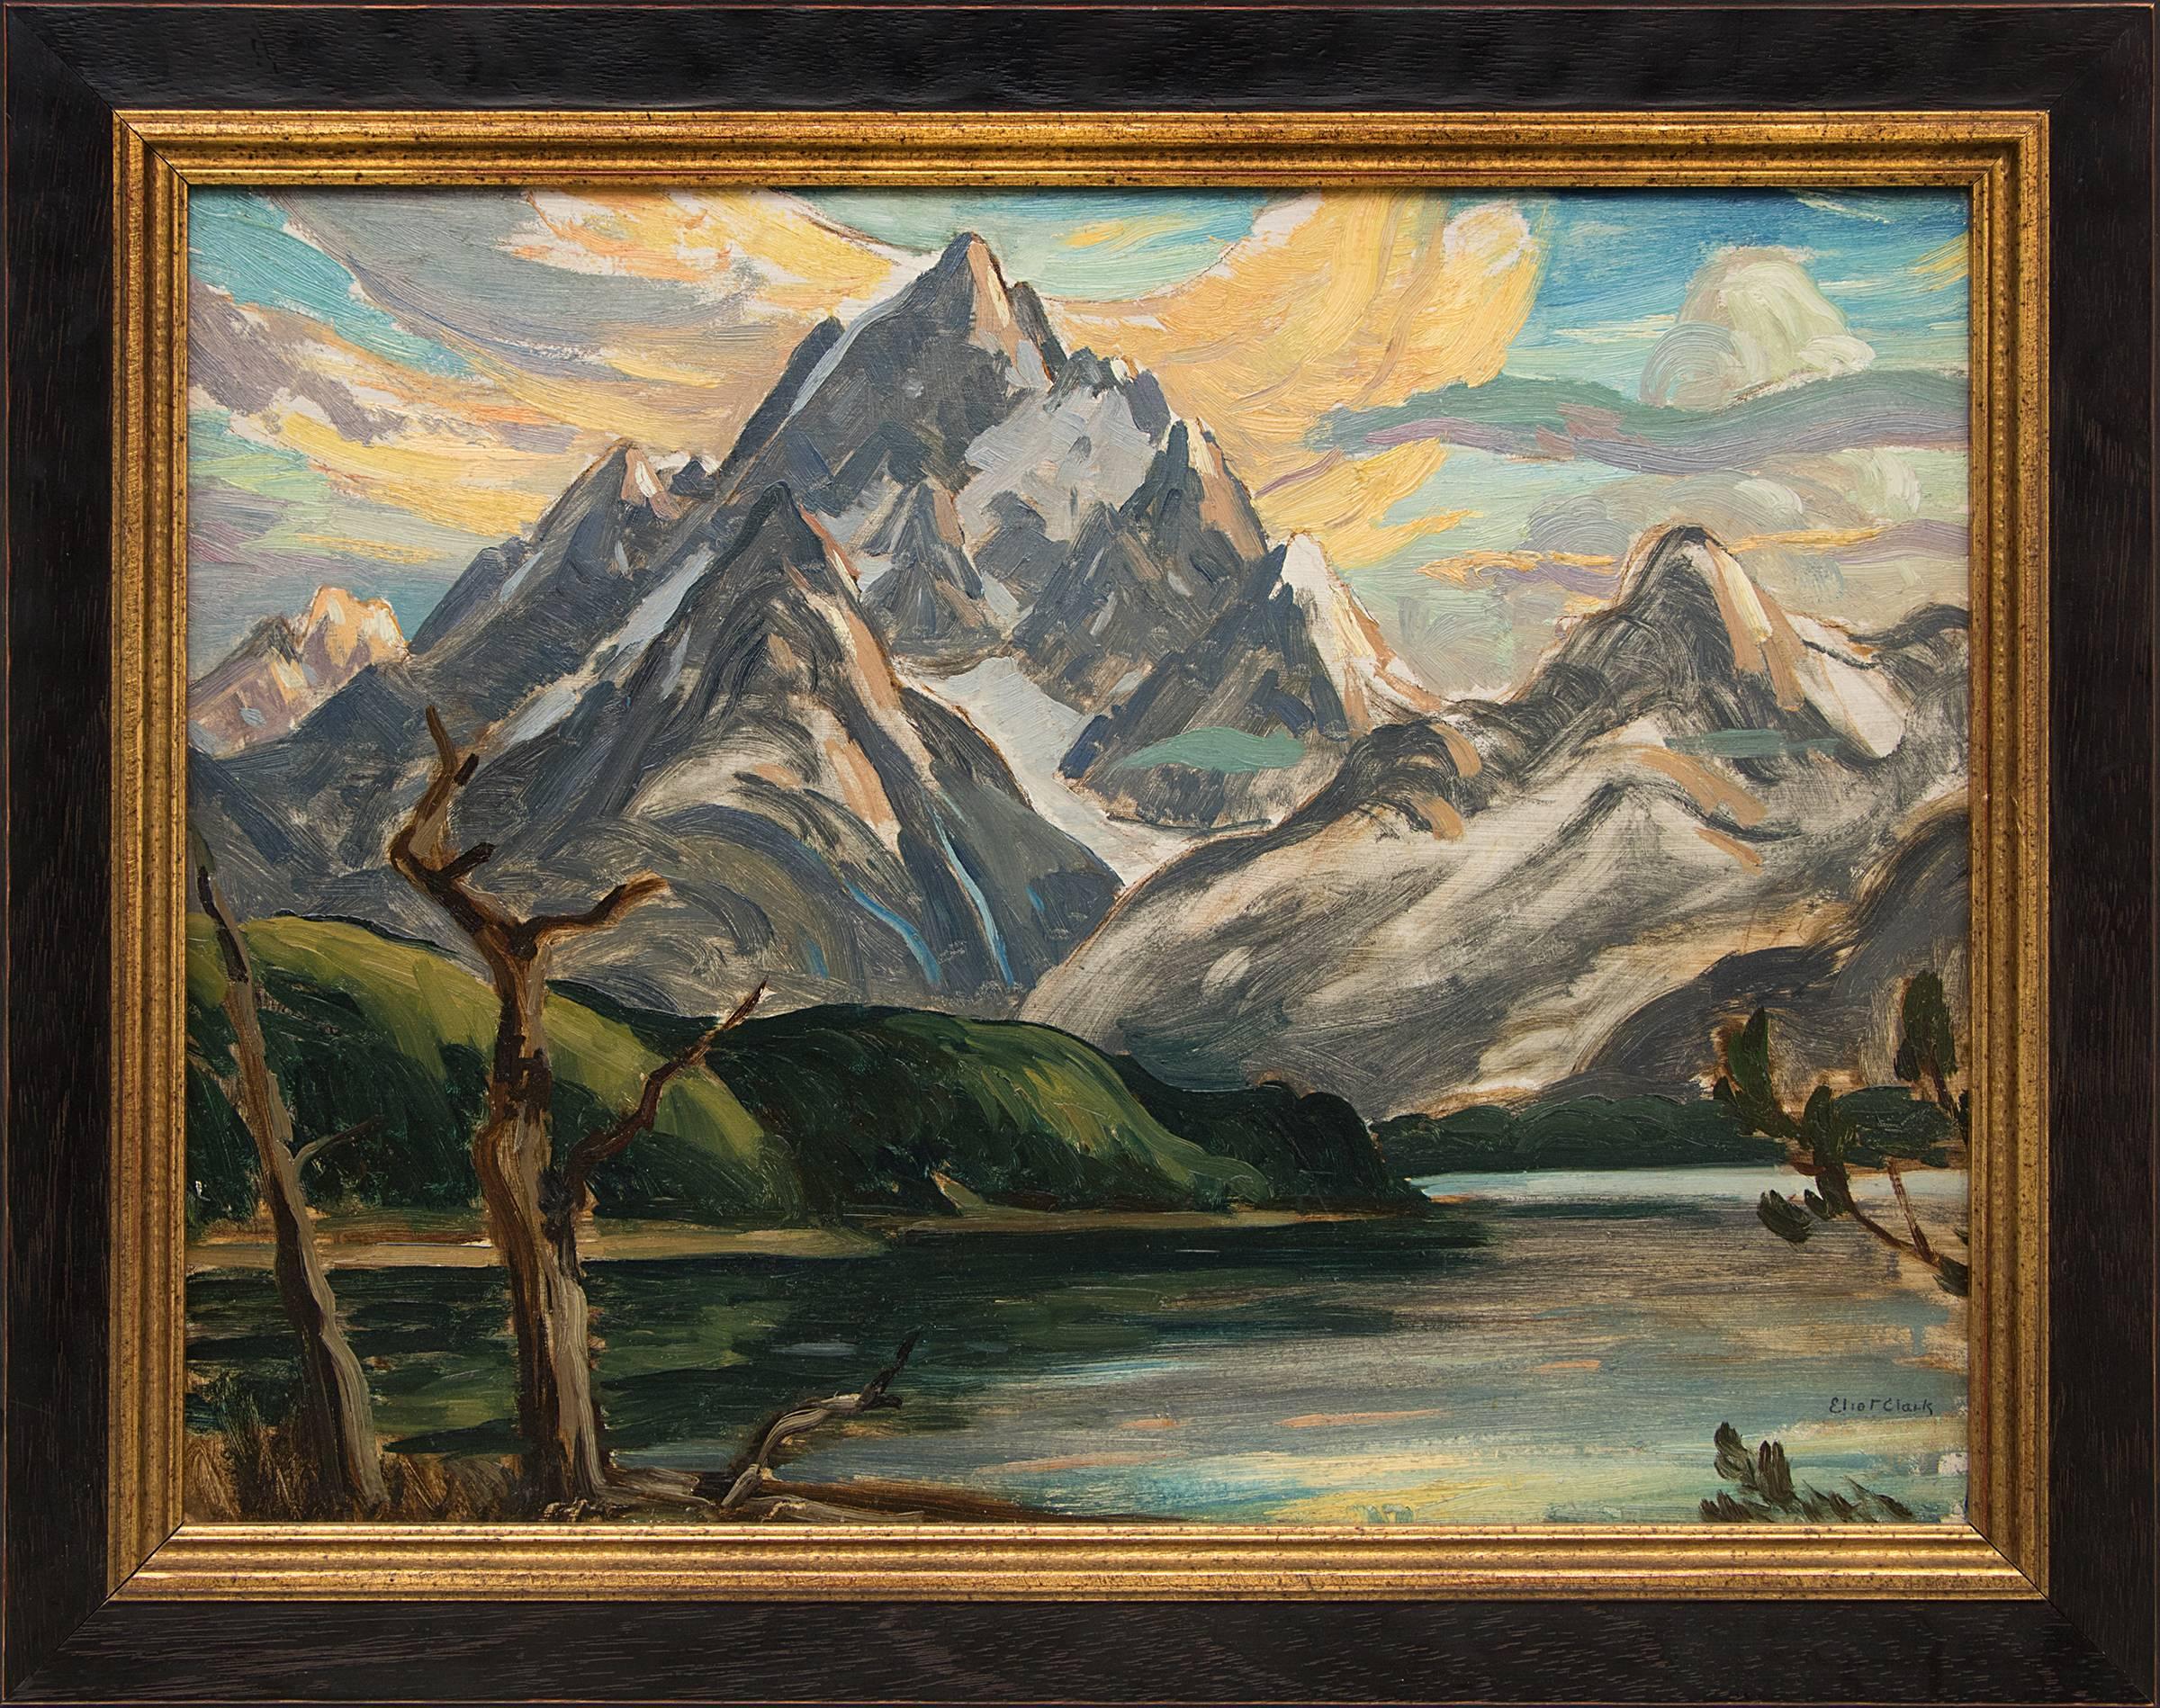 Eliot Clark Landscape Painting - Untitled (The Grand Tetons and Jackson Lake, Wyoming Mountain Landscape)